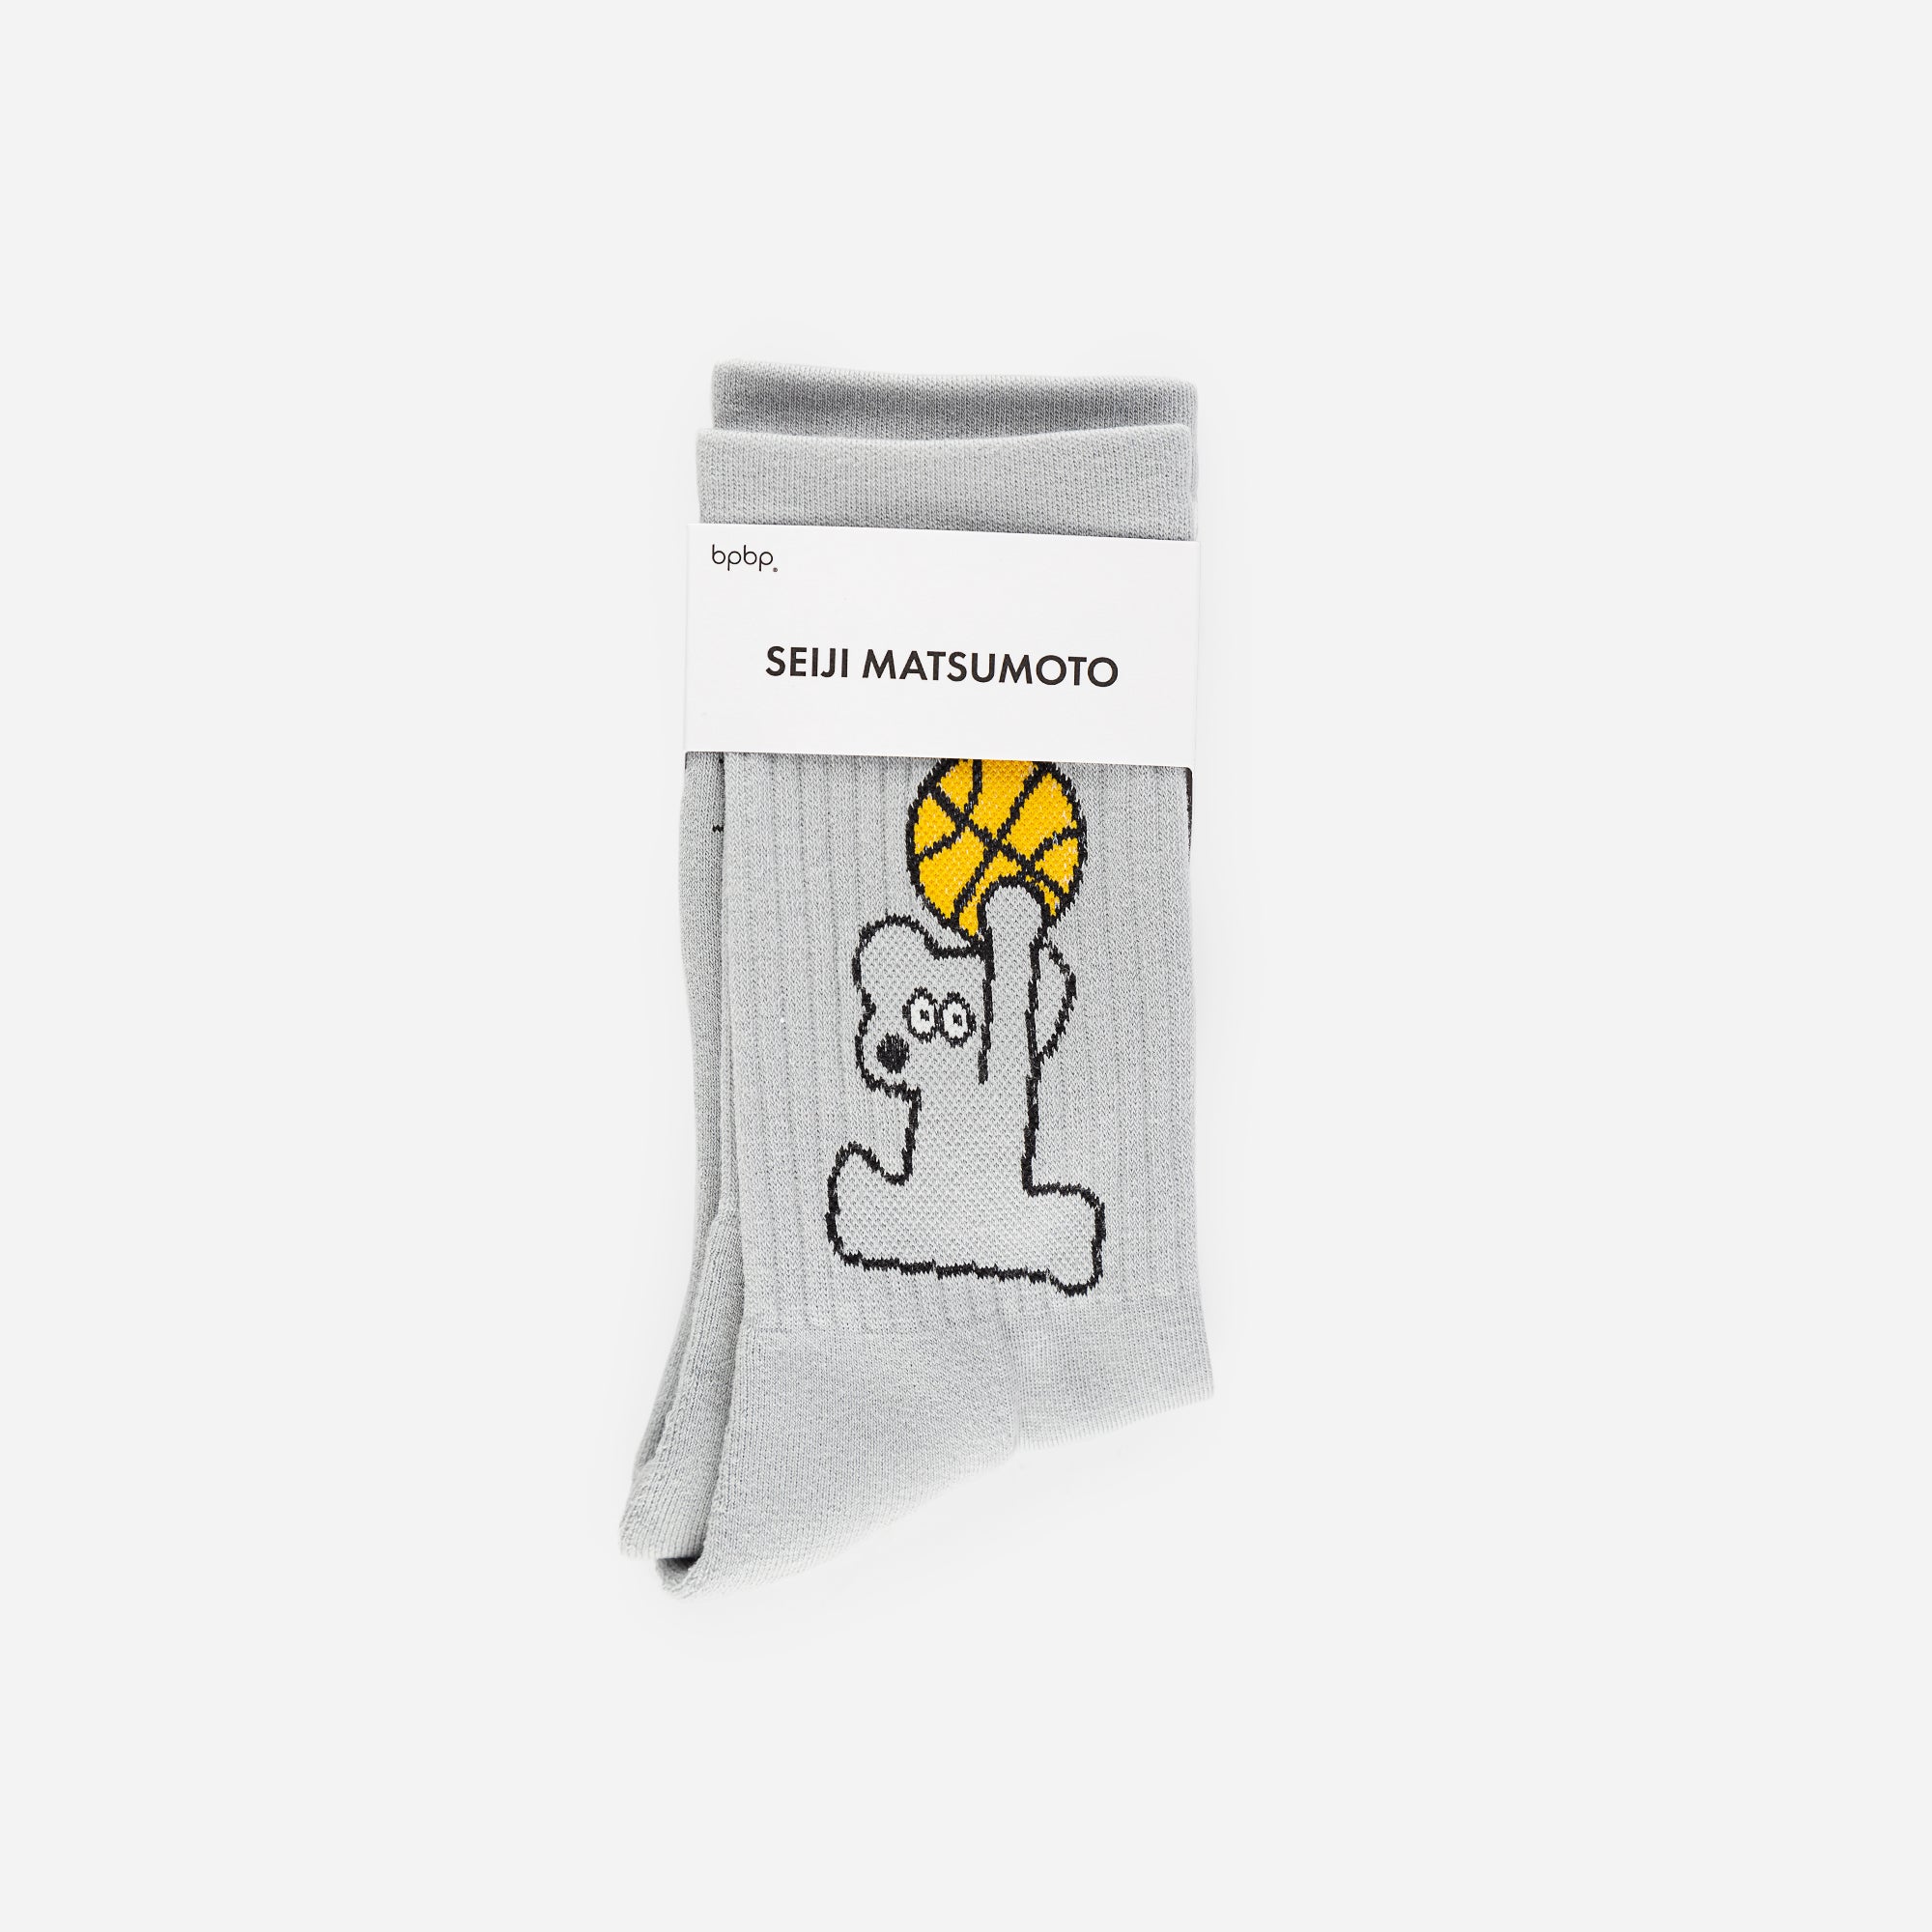 ANDY Sport Gray Socks